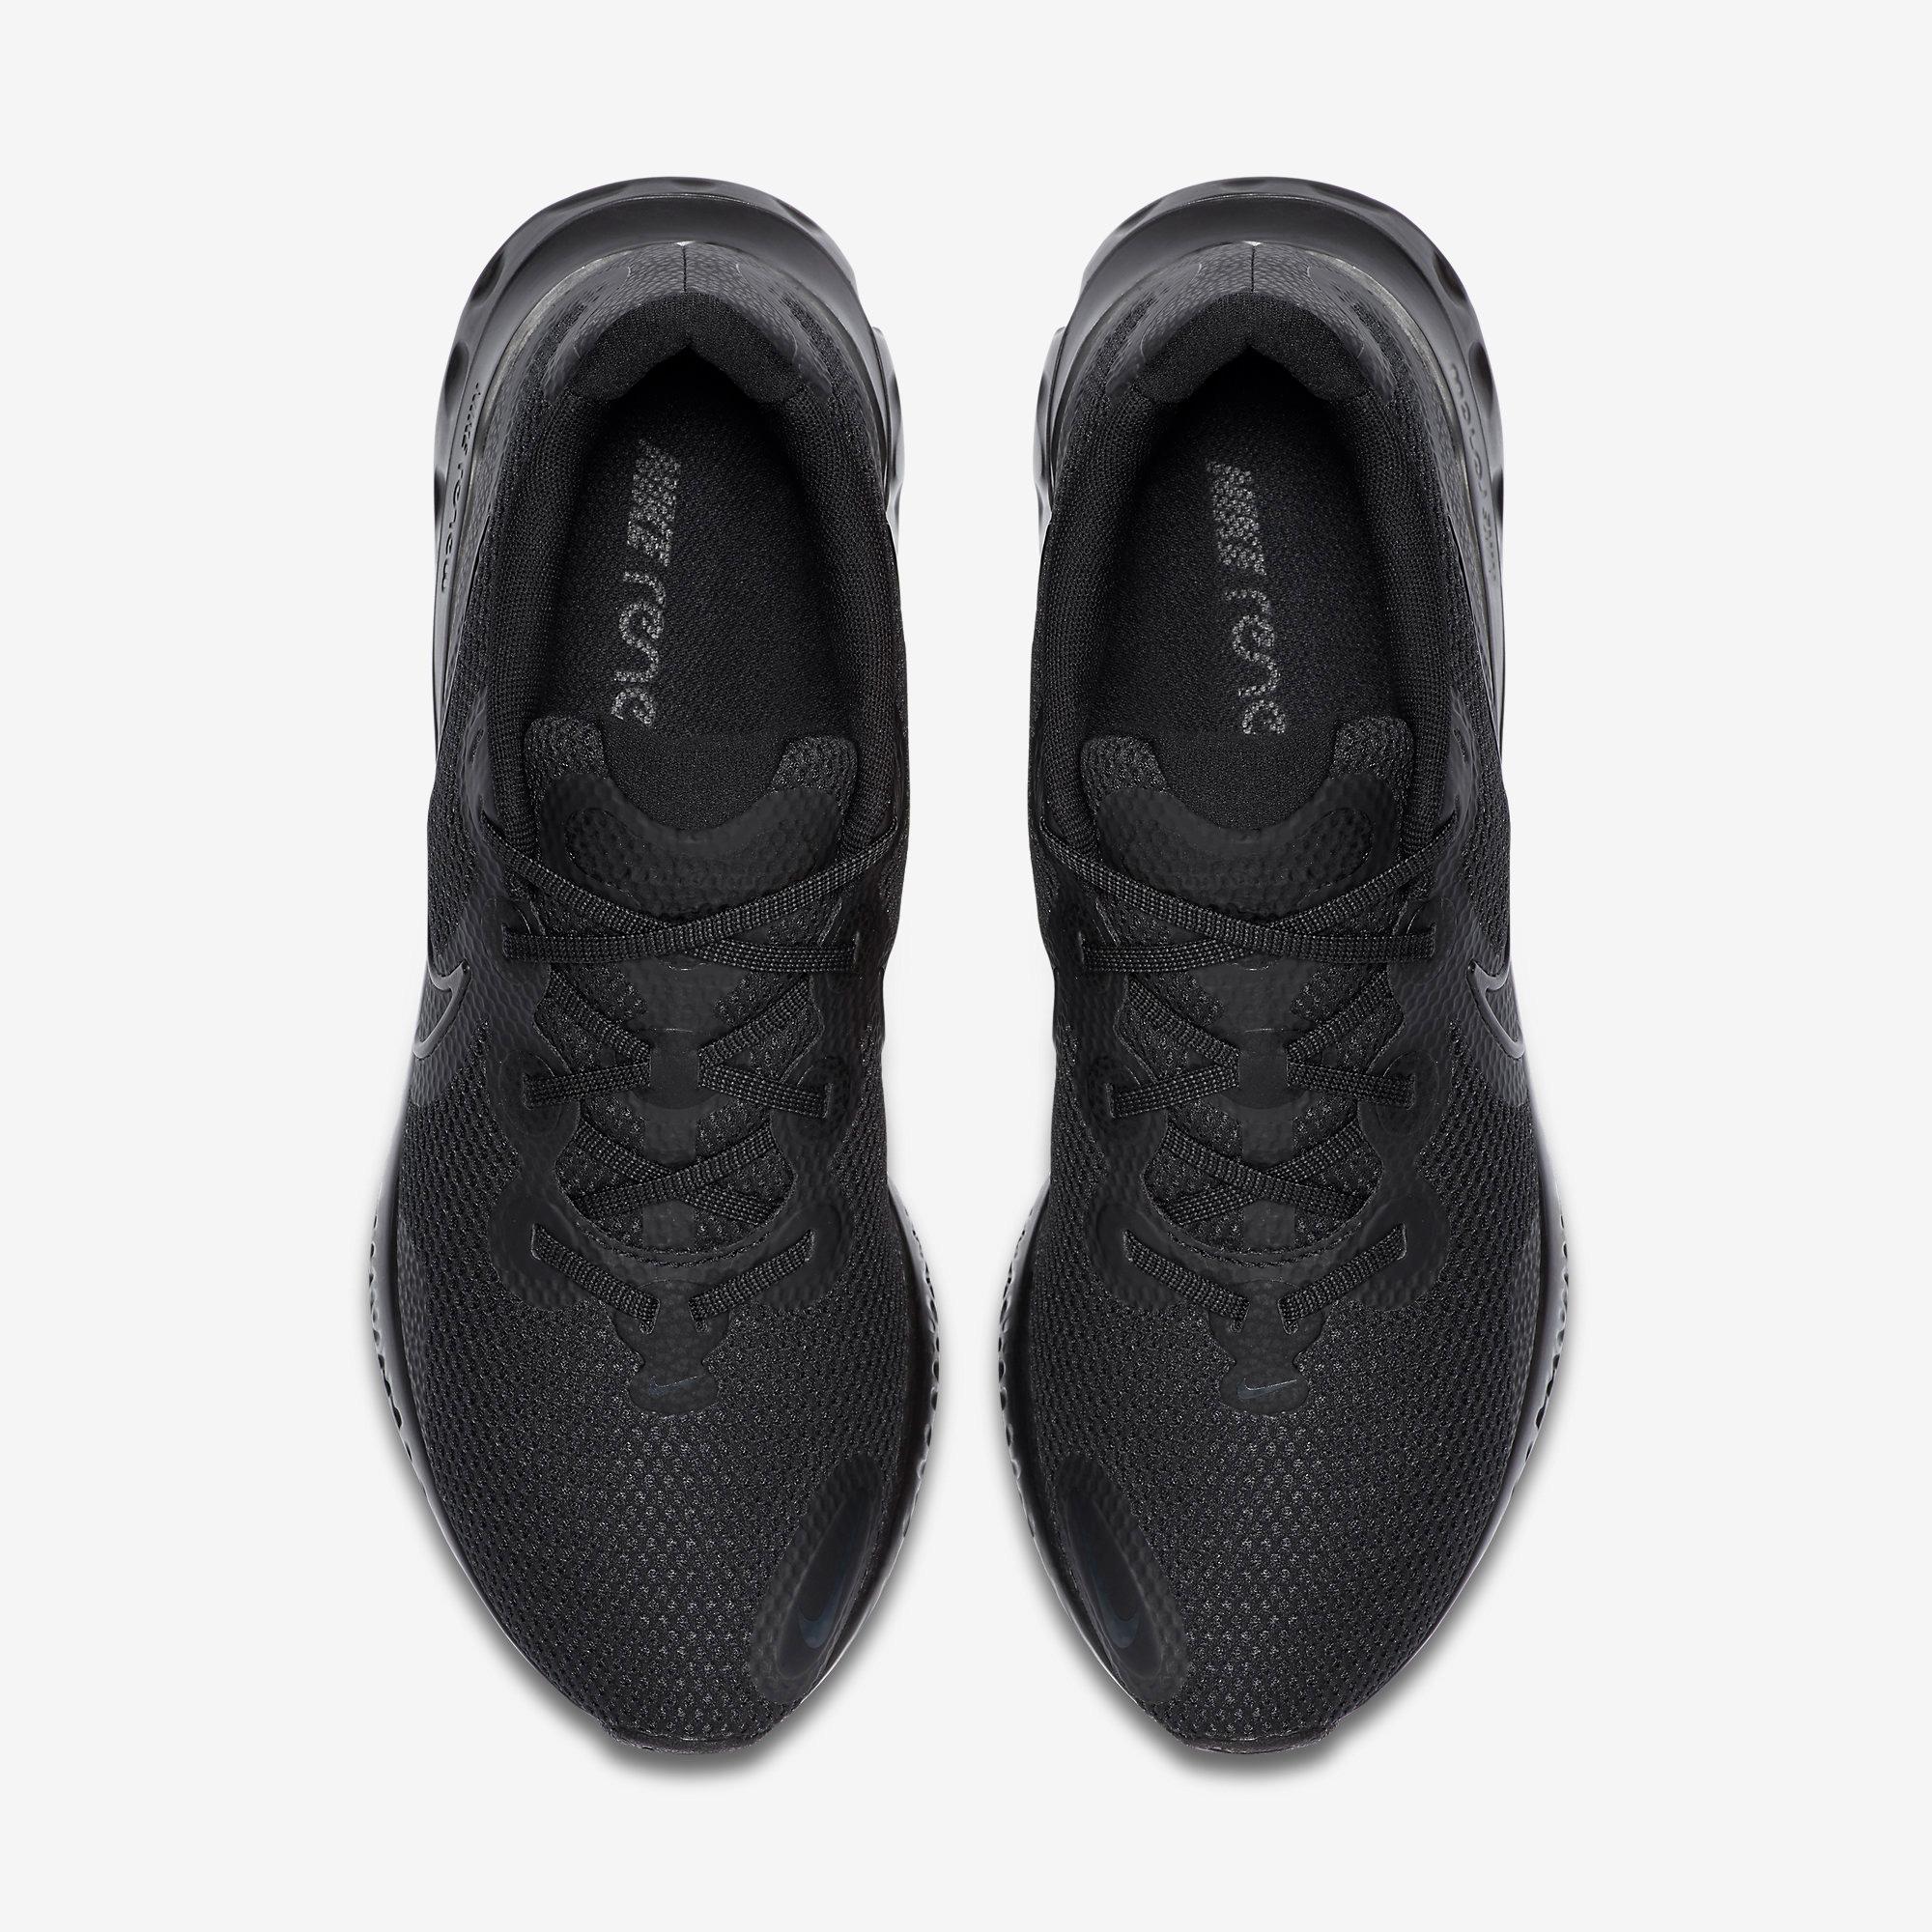 Nike Mens Renew Run Running Shoes - Black/Anthracite - Tennisnuts.com